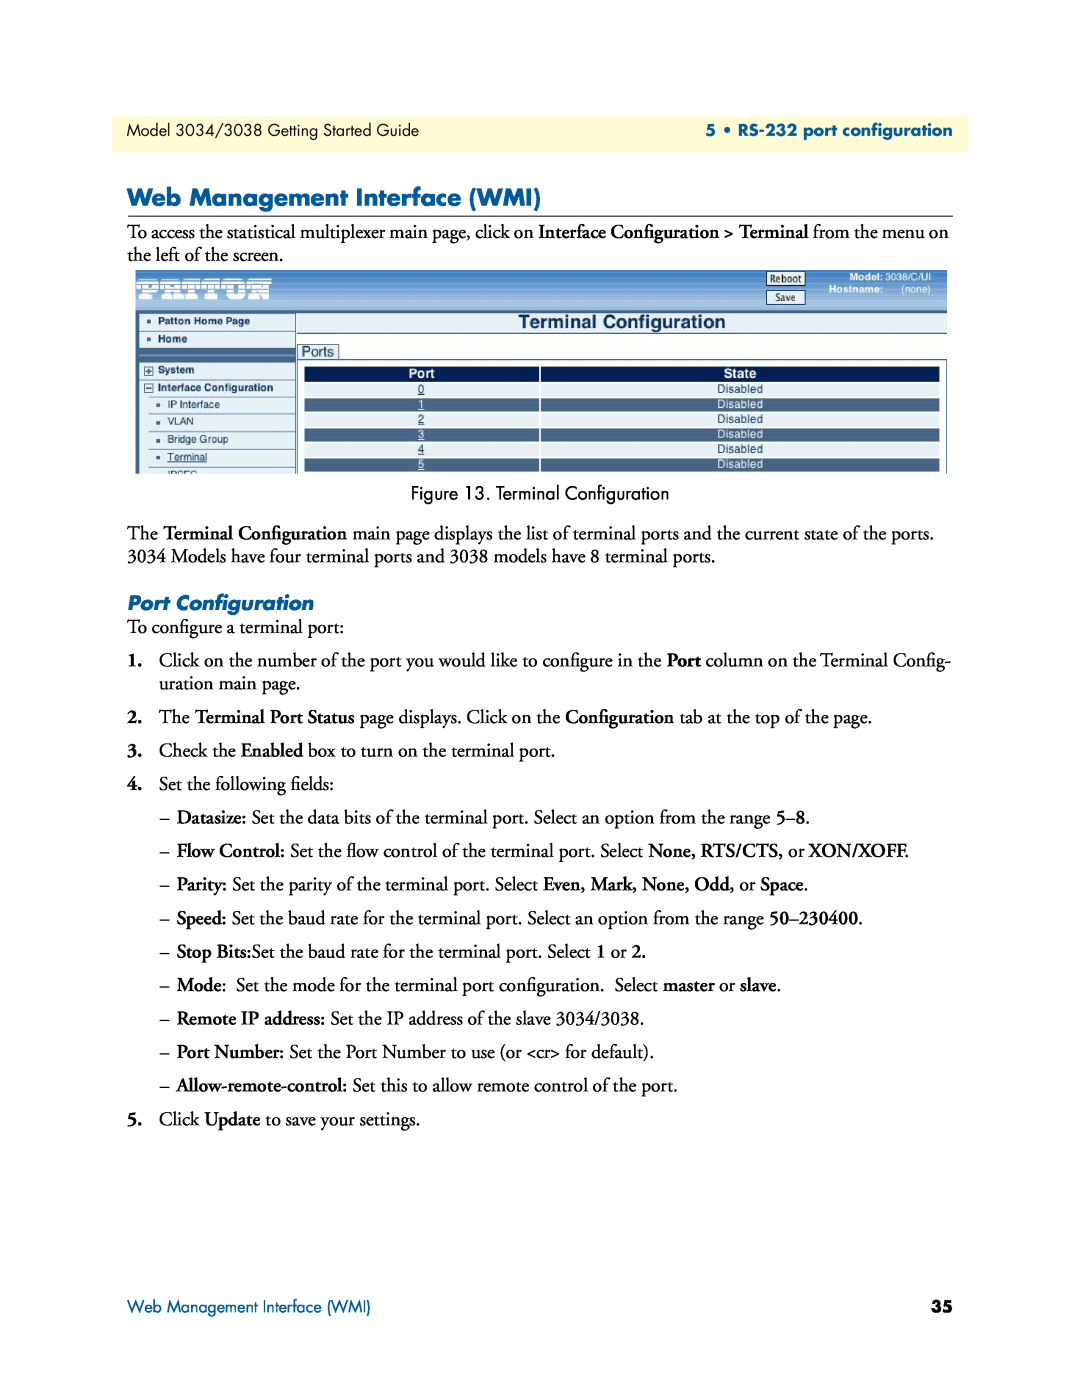 Patton electronic 3034/3038 manual Web Management Interface WMI, Port Conﬁguration 